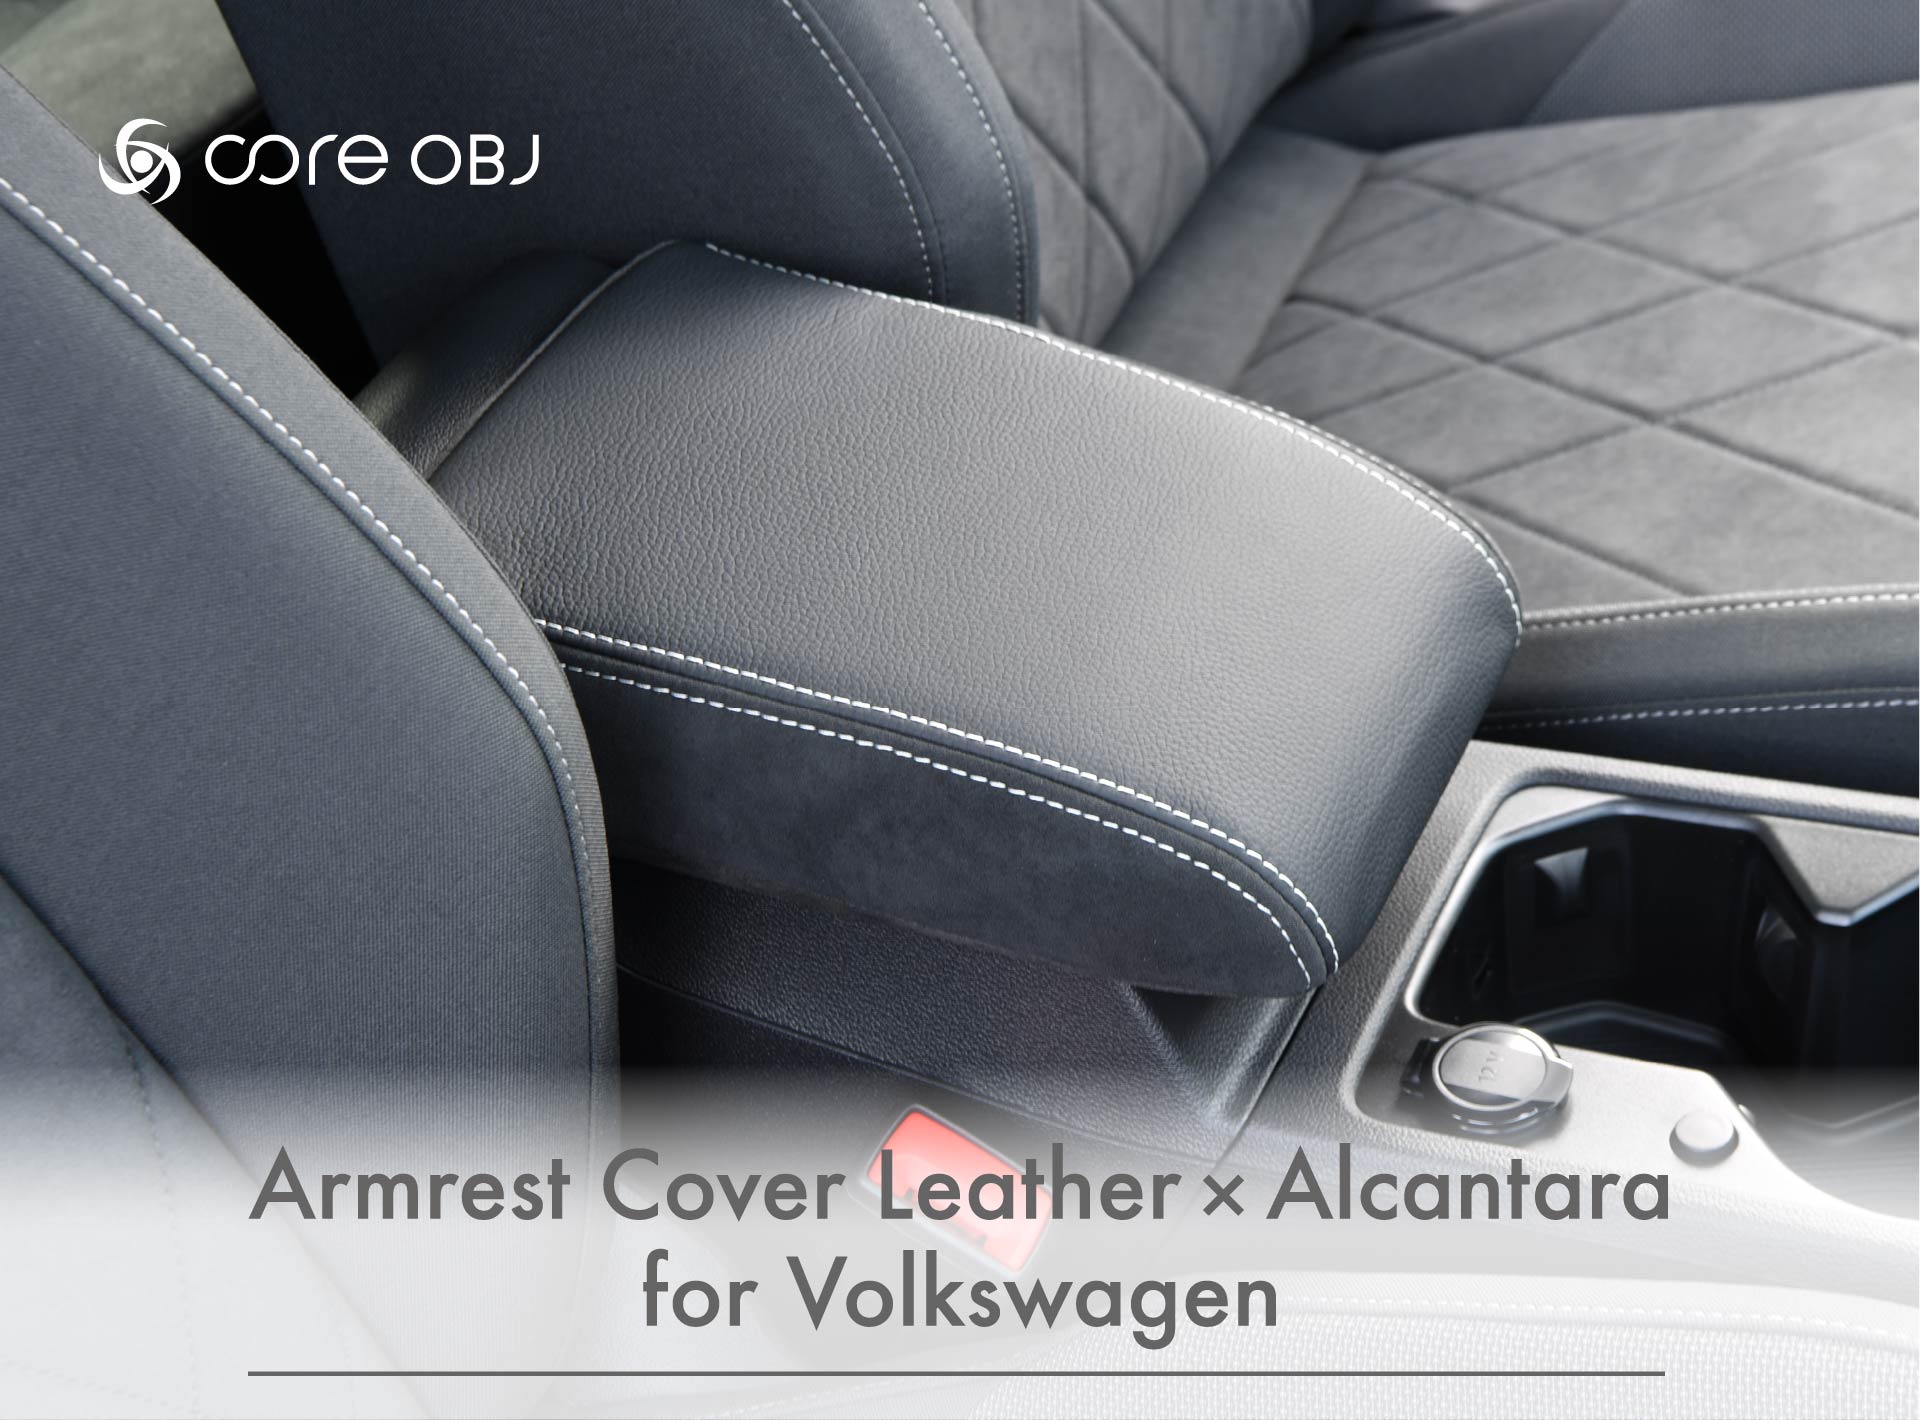 Armrest Cover Leather × Alcantara for Volkswagen / core obj select